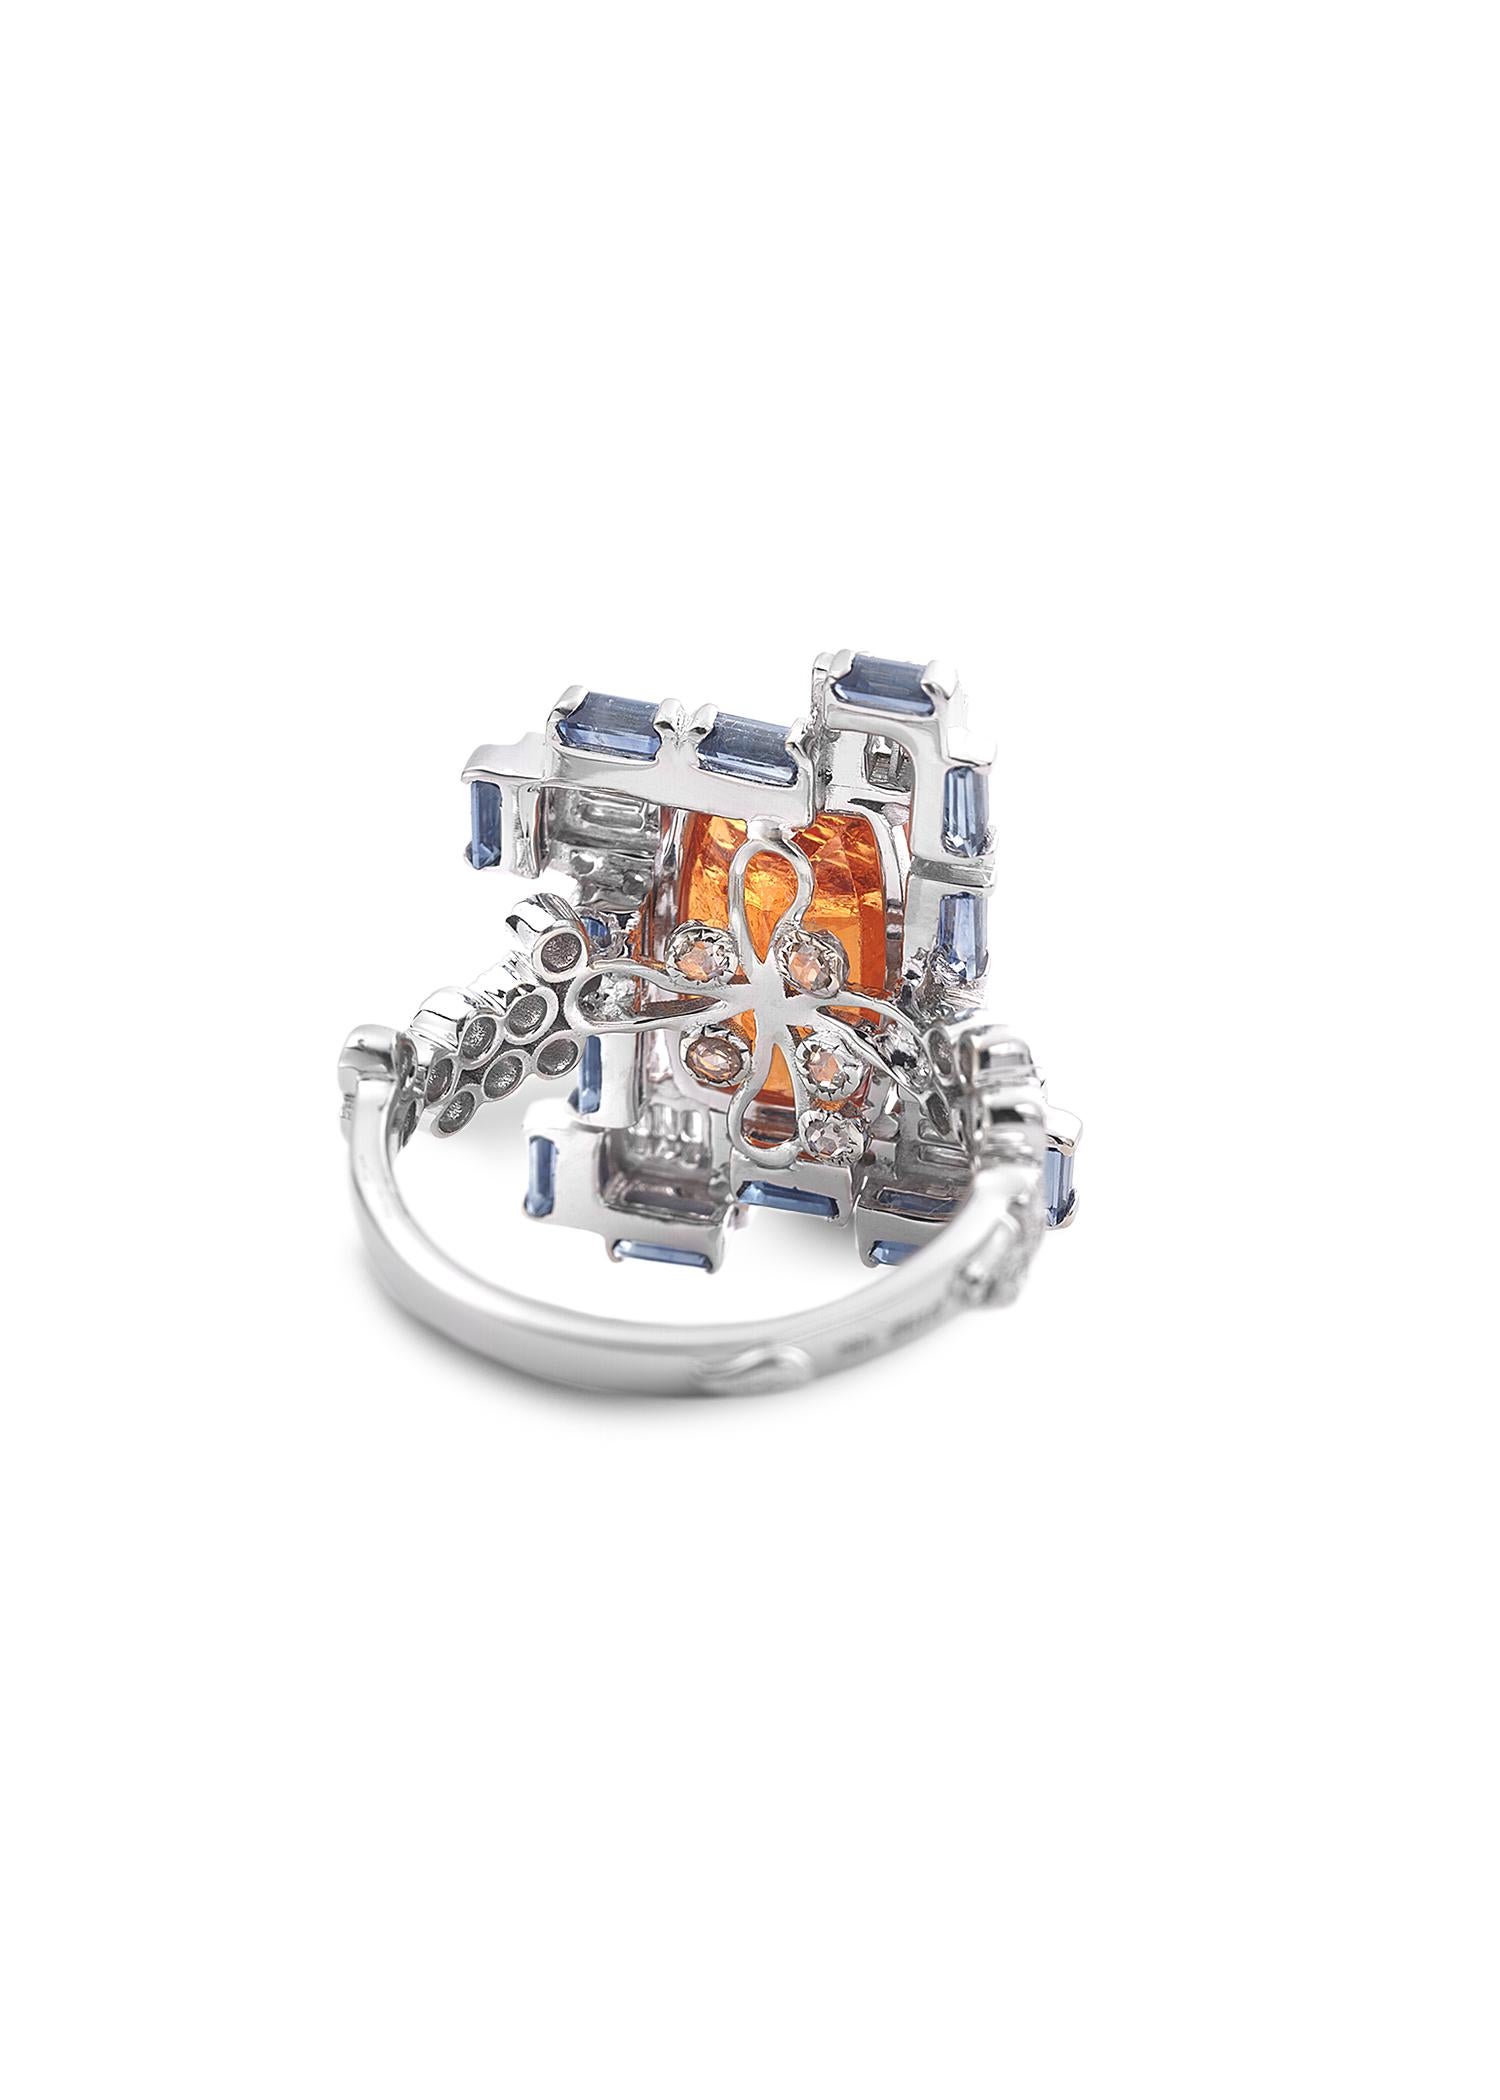 Mandarin Garnet, Diamond and Sapphire ring. Mandarin Garnet 5.7ct, Blue Sapphire 1.4ct, Diamonds 0.89cts.
SIZE 7
 